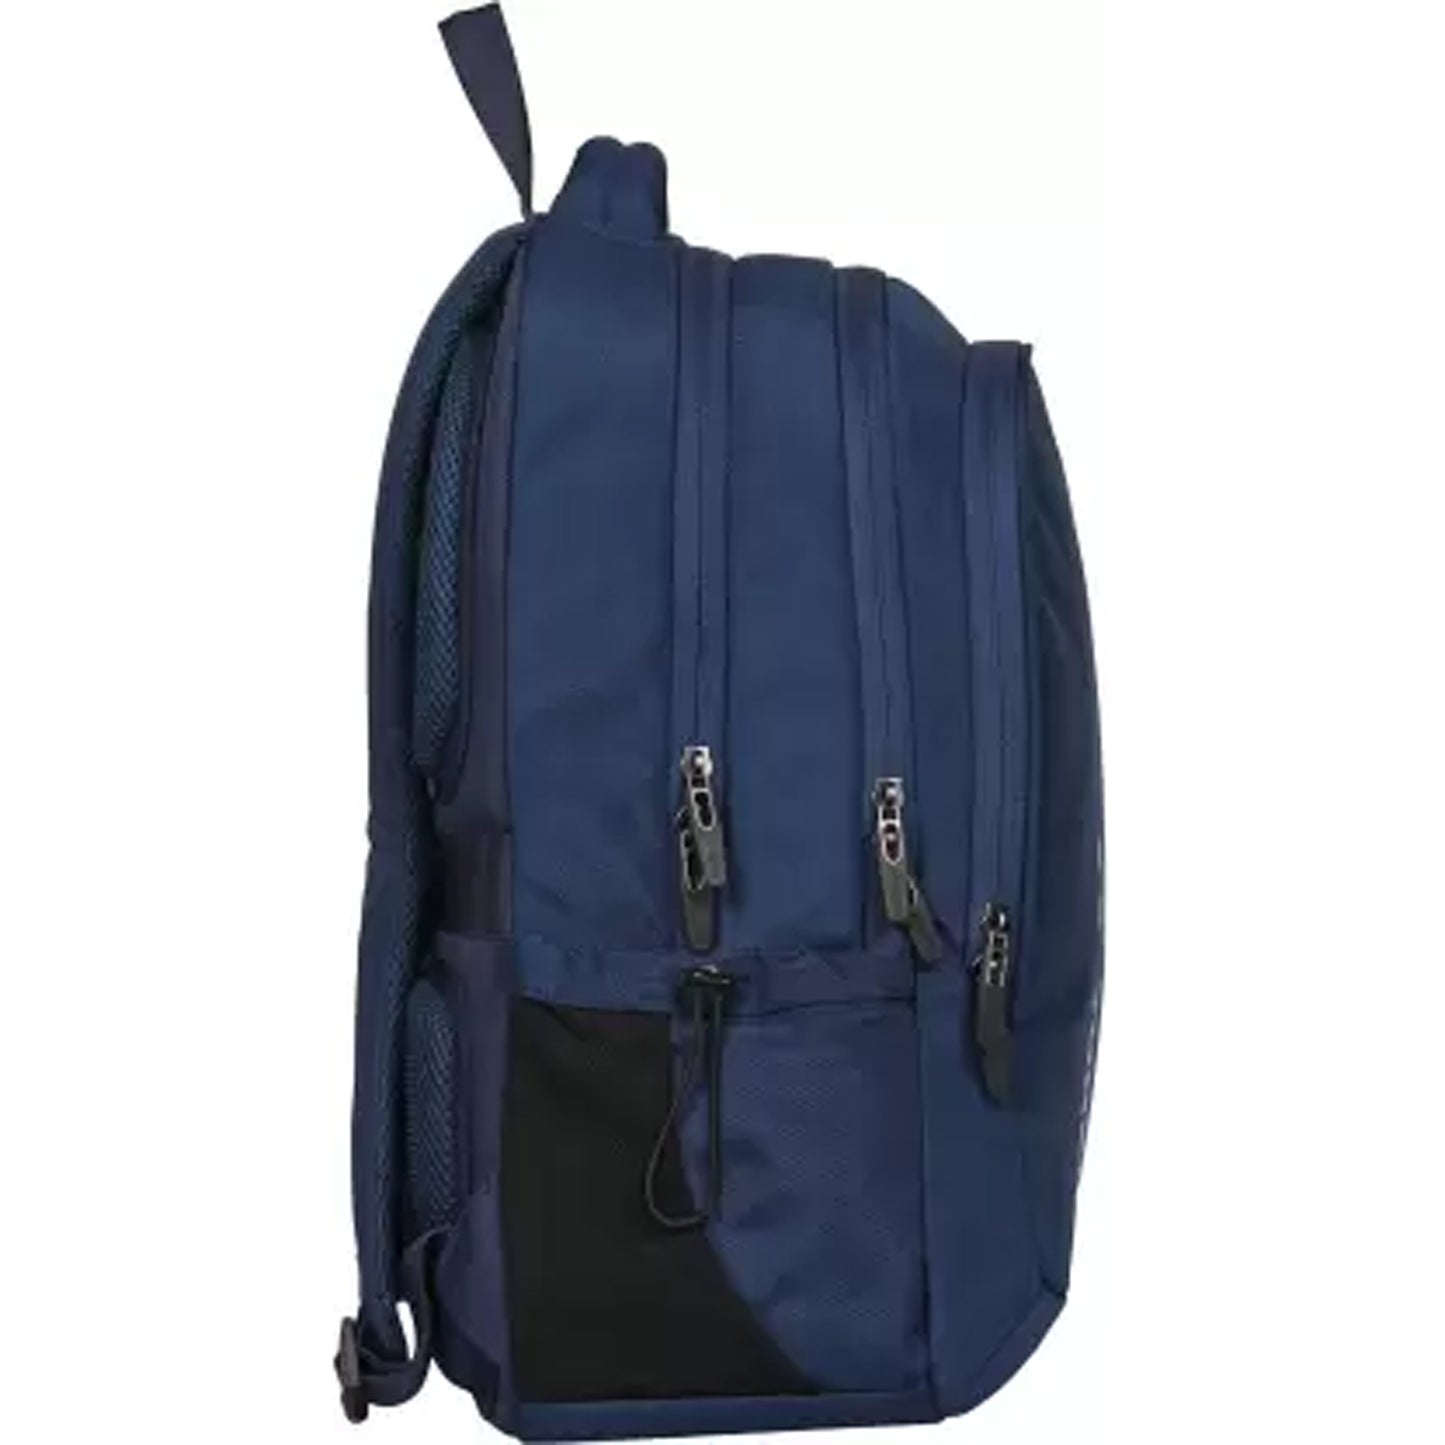 Yonex SUNR H03AO-S Backpack, Navy - Best Price online Prokicksports.com